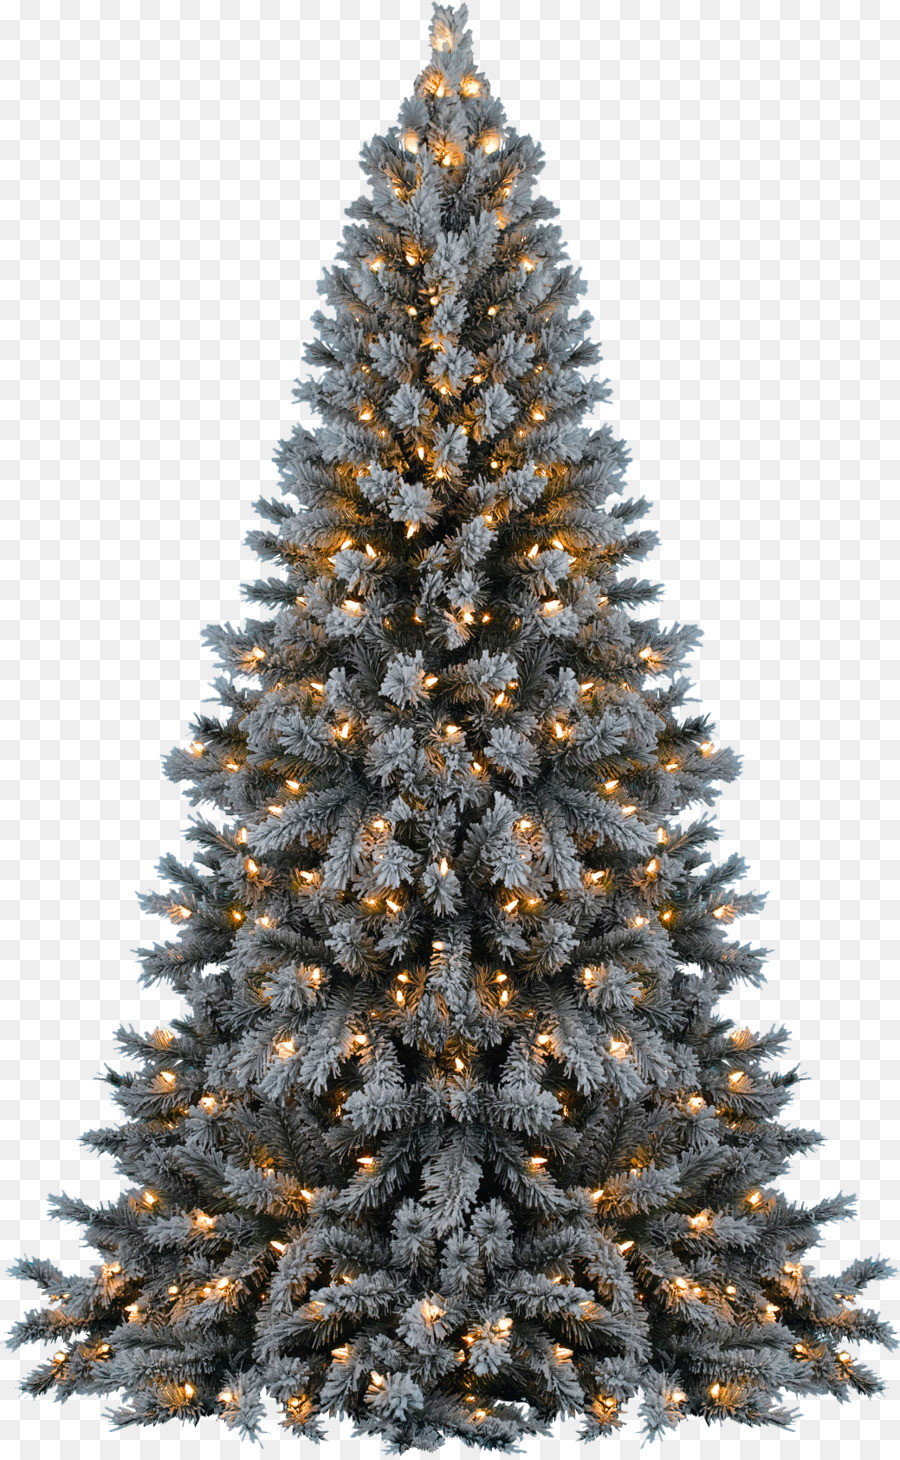 Christmas tree - Christmas Tree PNG Transparent png download - 900*1457 - Free Transparent Christmas Tree png Download.